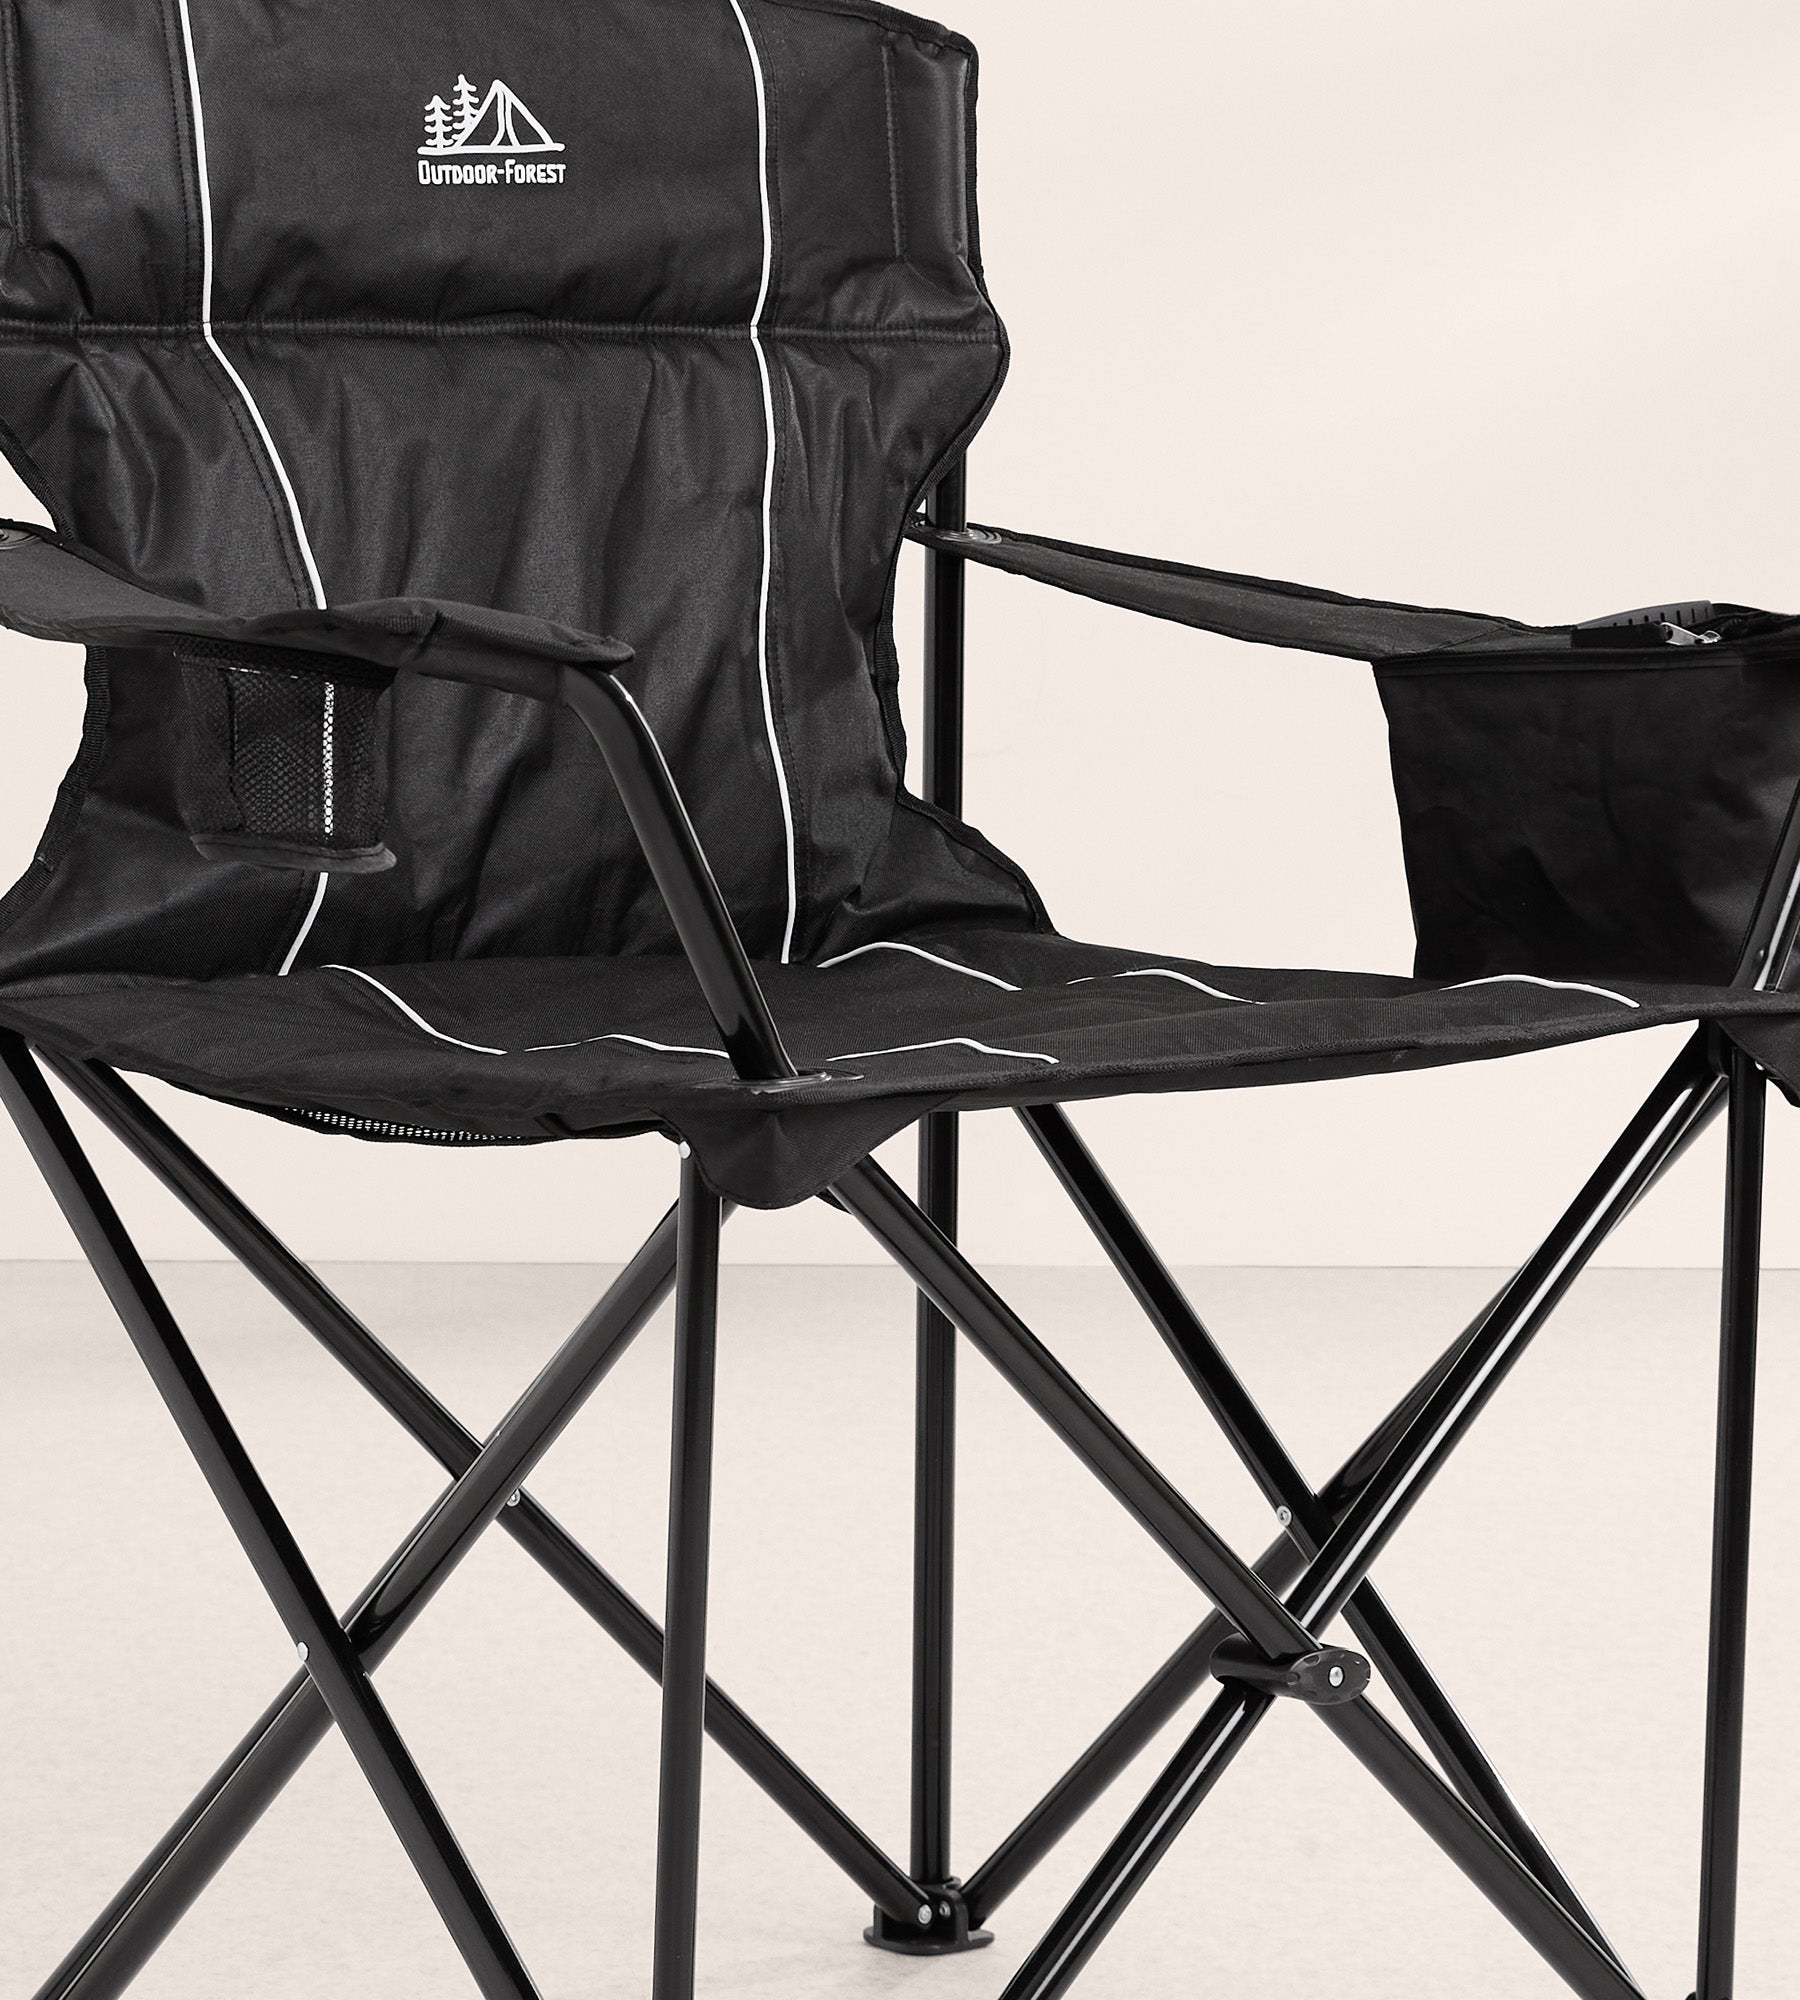 1000-lb. Capacity Heavy-Duty Portable Chair – George Richards